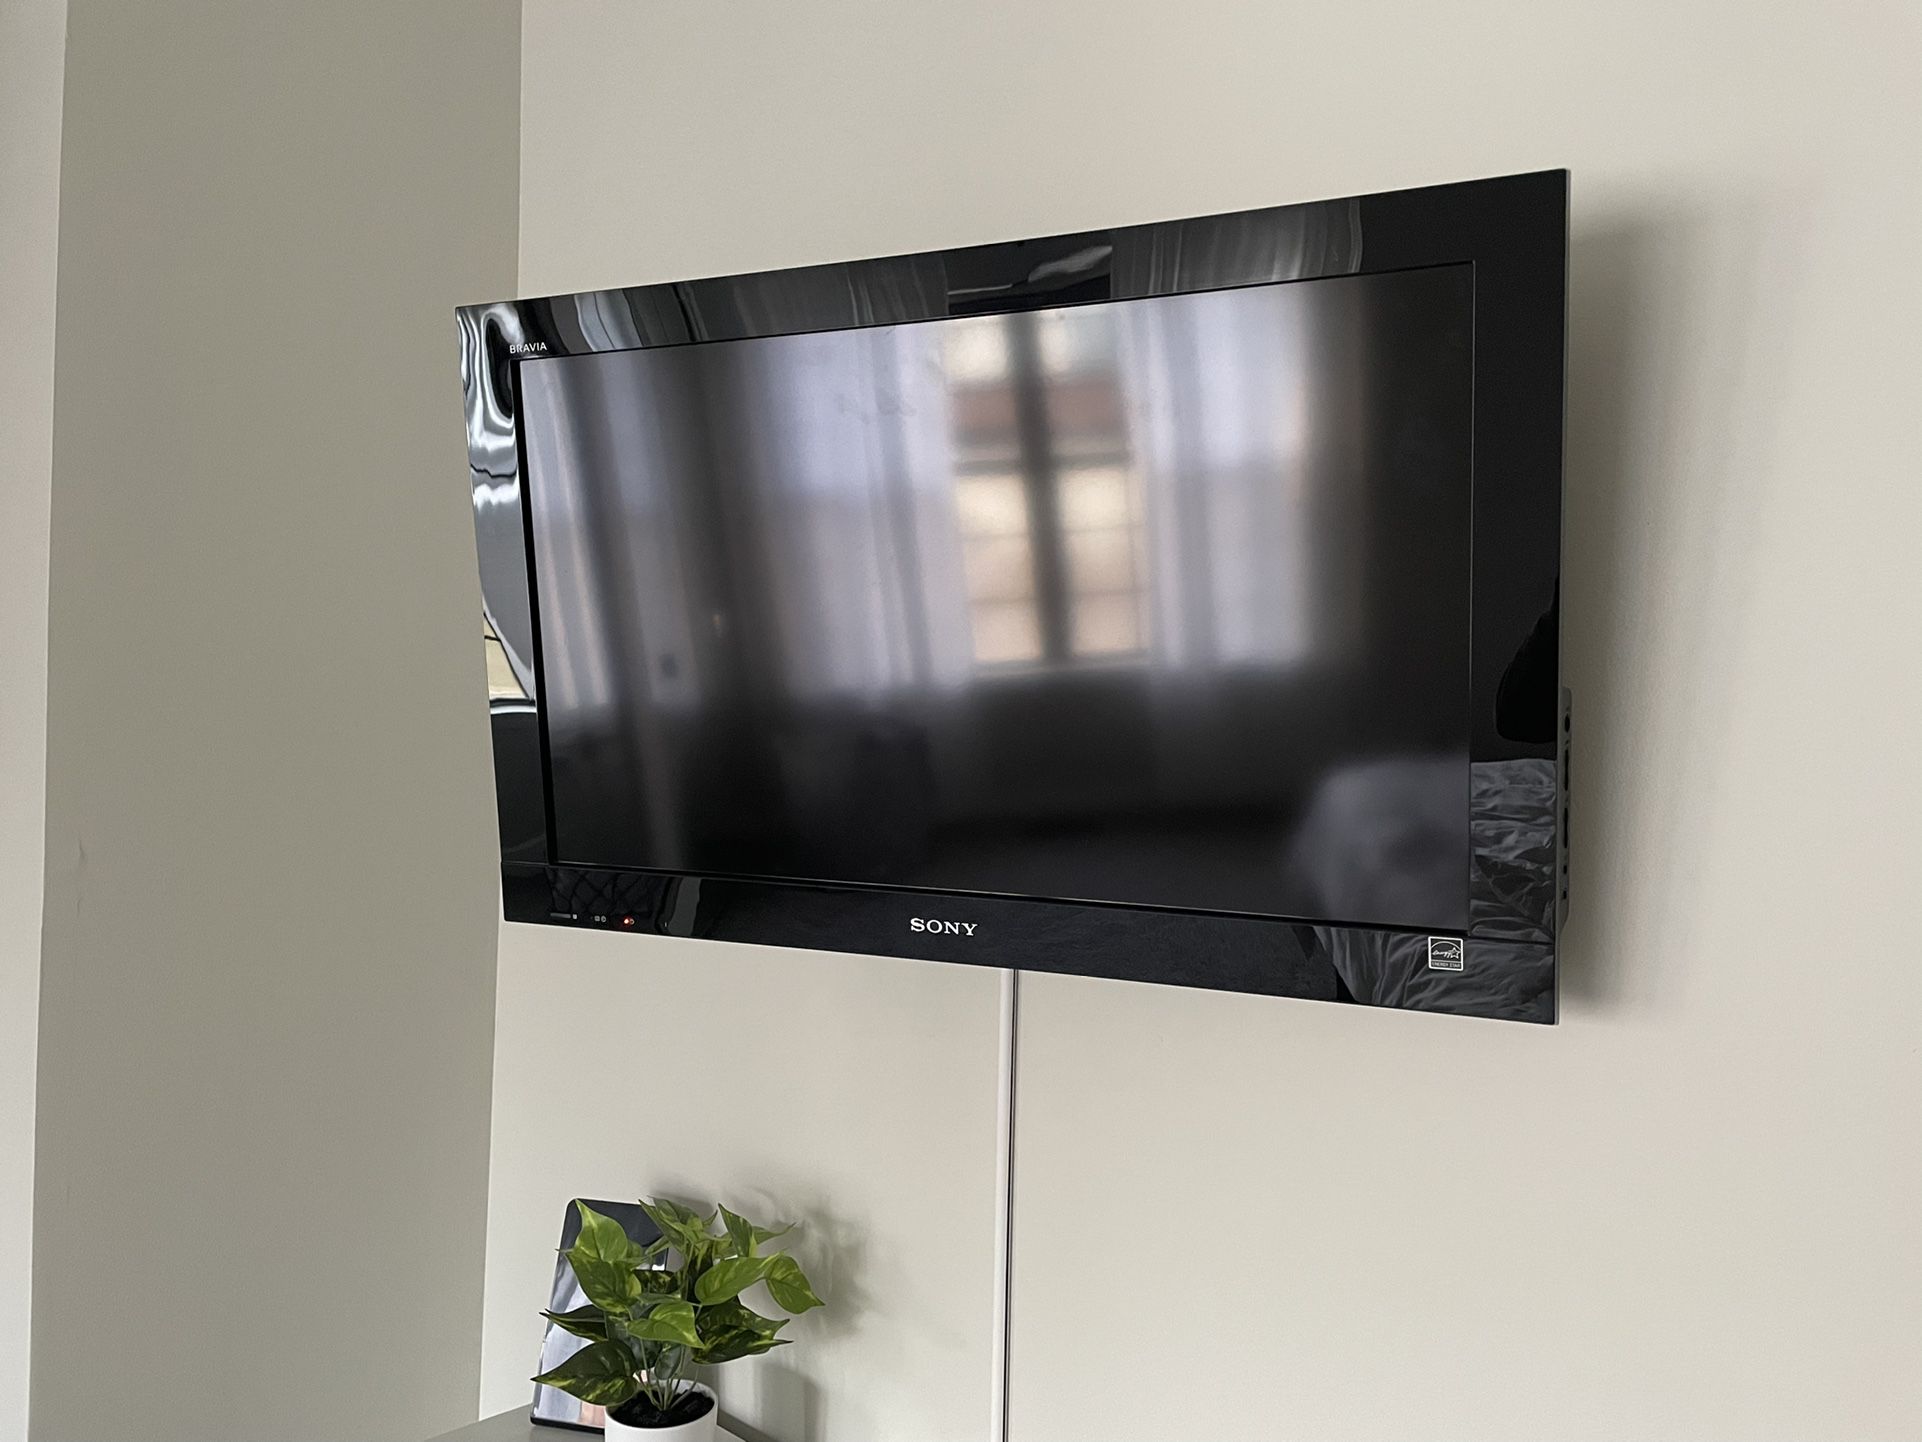 Sony 32” HD Flatscreen TV 